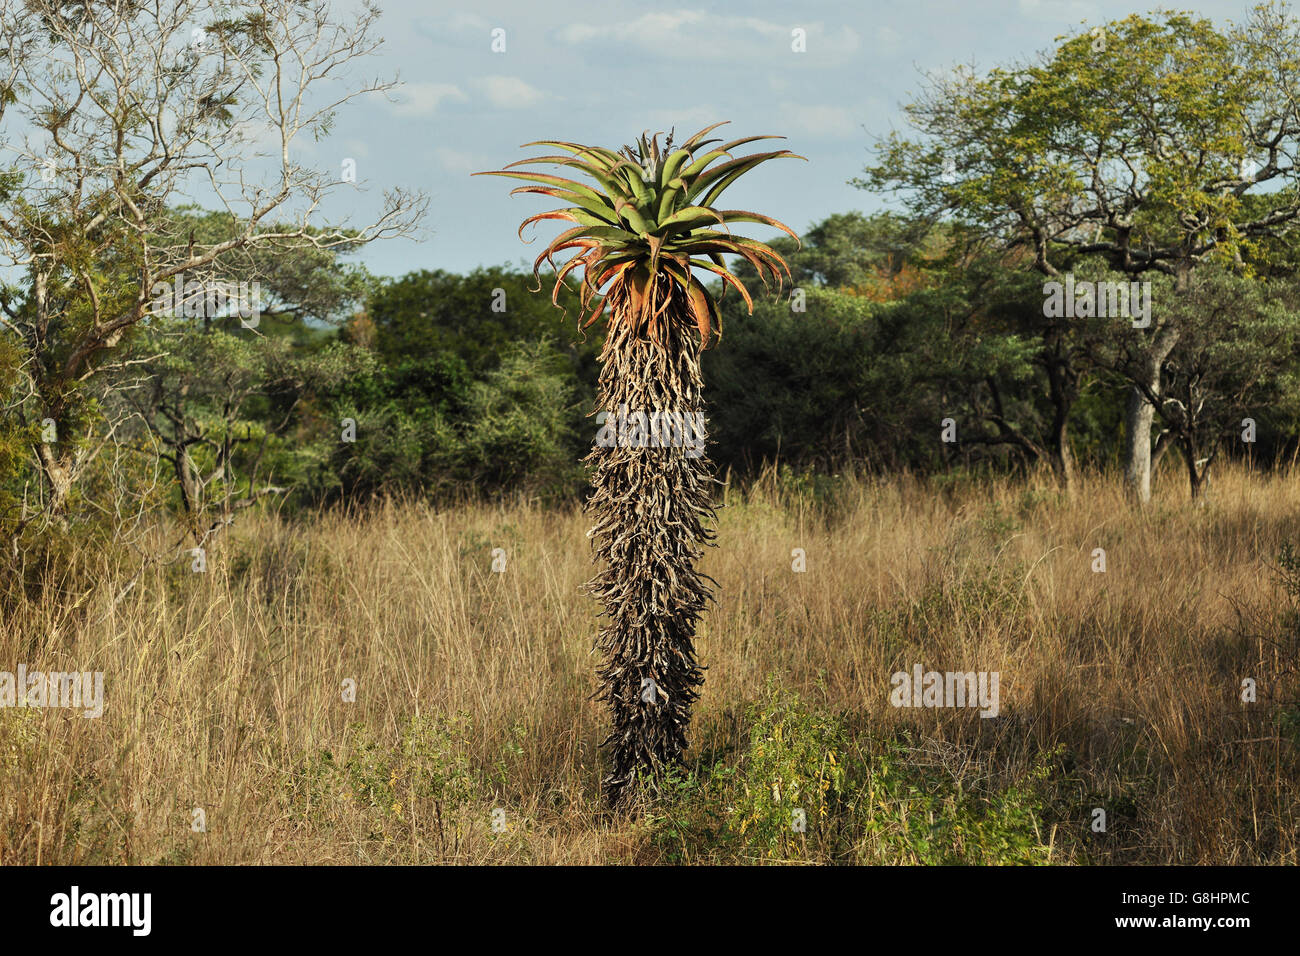 Mountain aloe tree, Tembe Elephant Park, Maputaland, KwaZulu Natal, South Africa. Art. Stock Photo